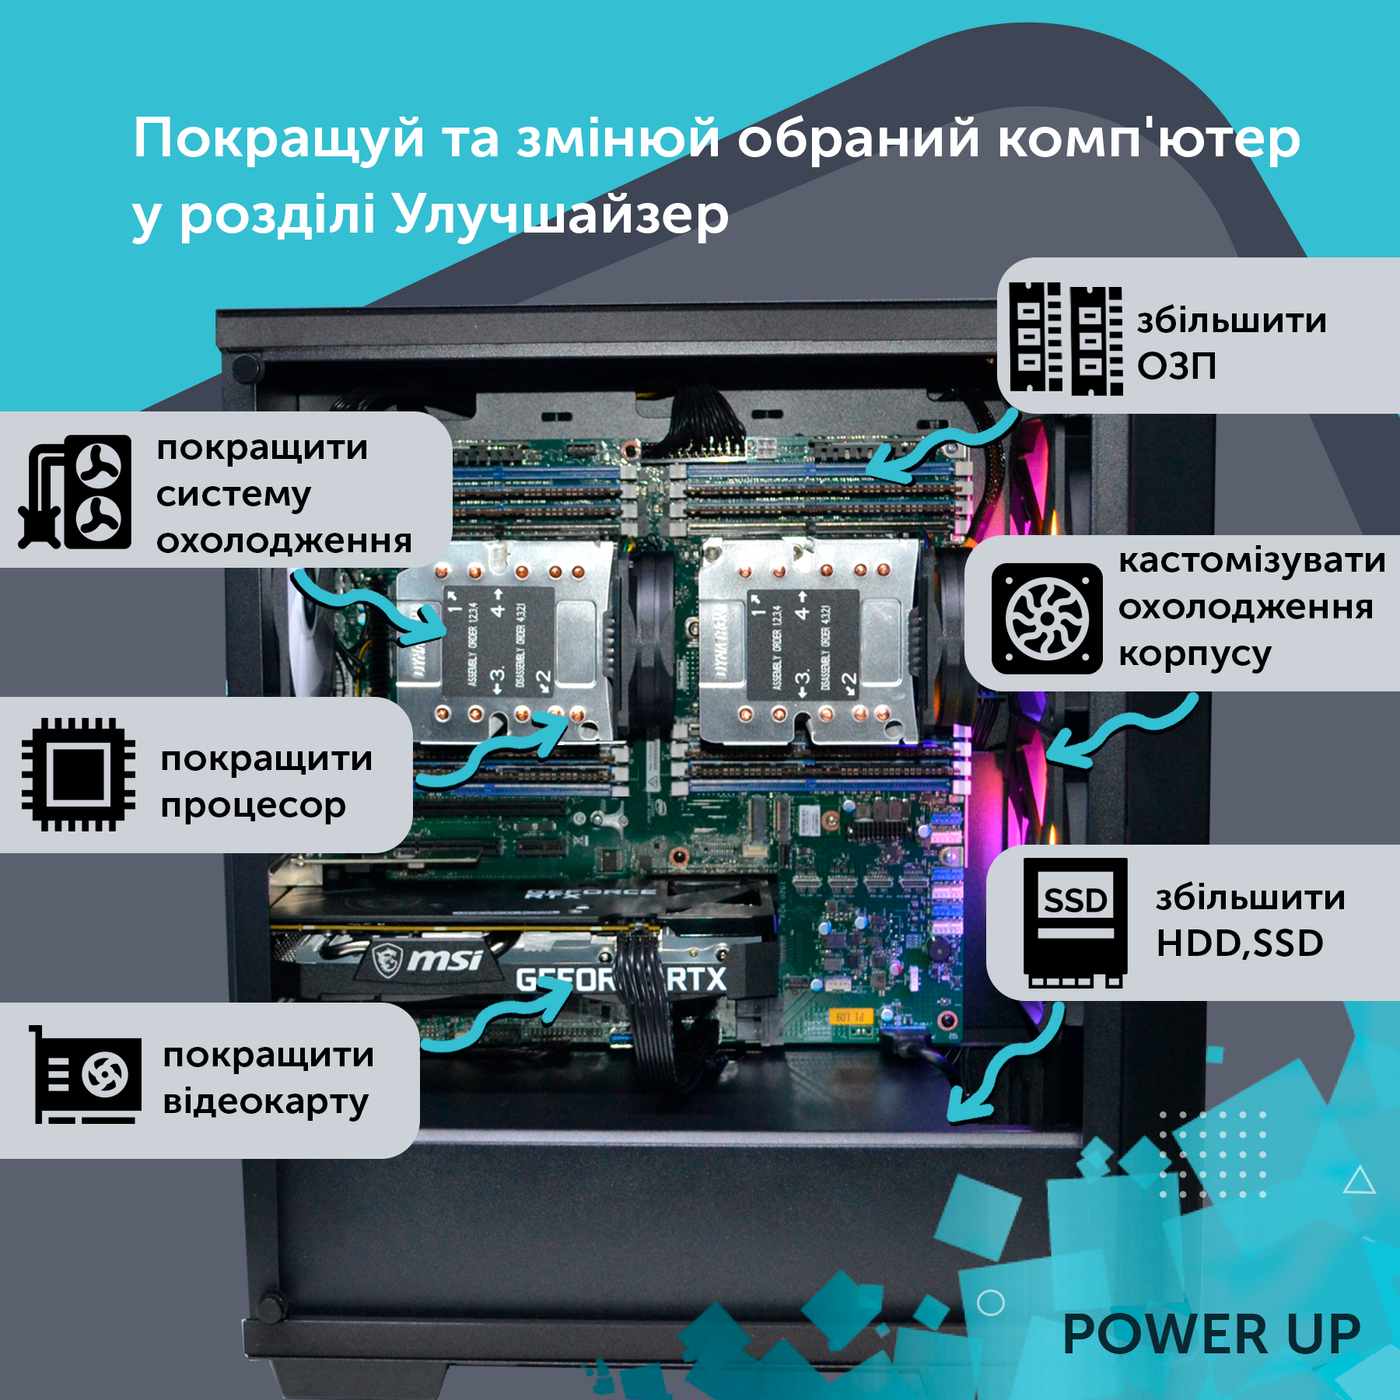 Робоча станція PowerUp #239 Xeon E5 2699 v4/64 GB/SSD 512GB/GeForce RTX 4060 8GB